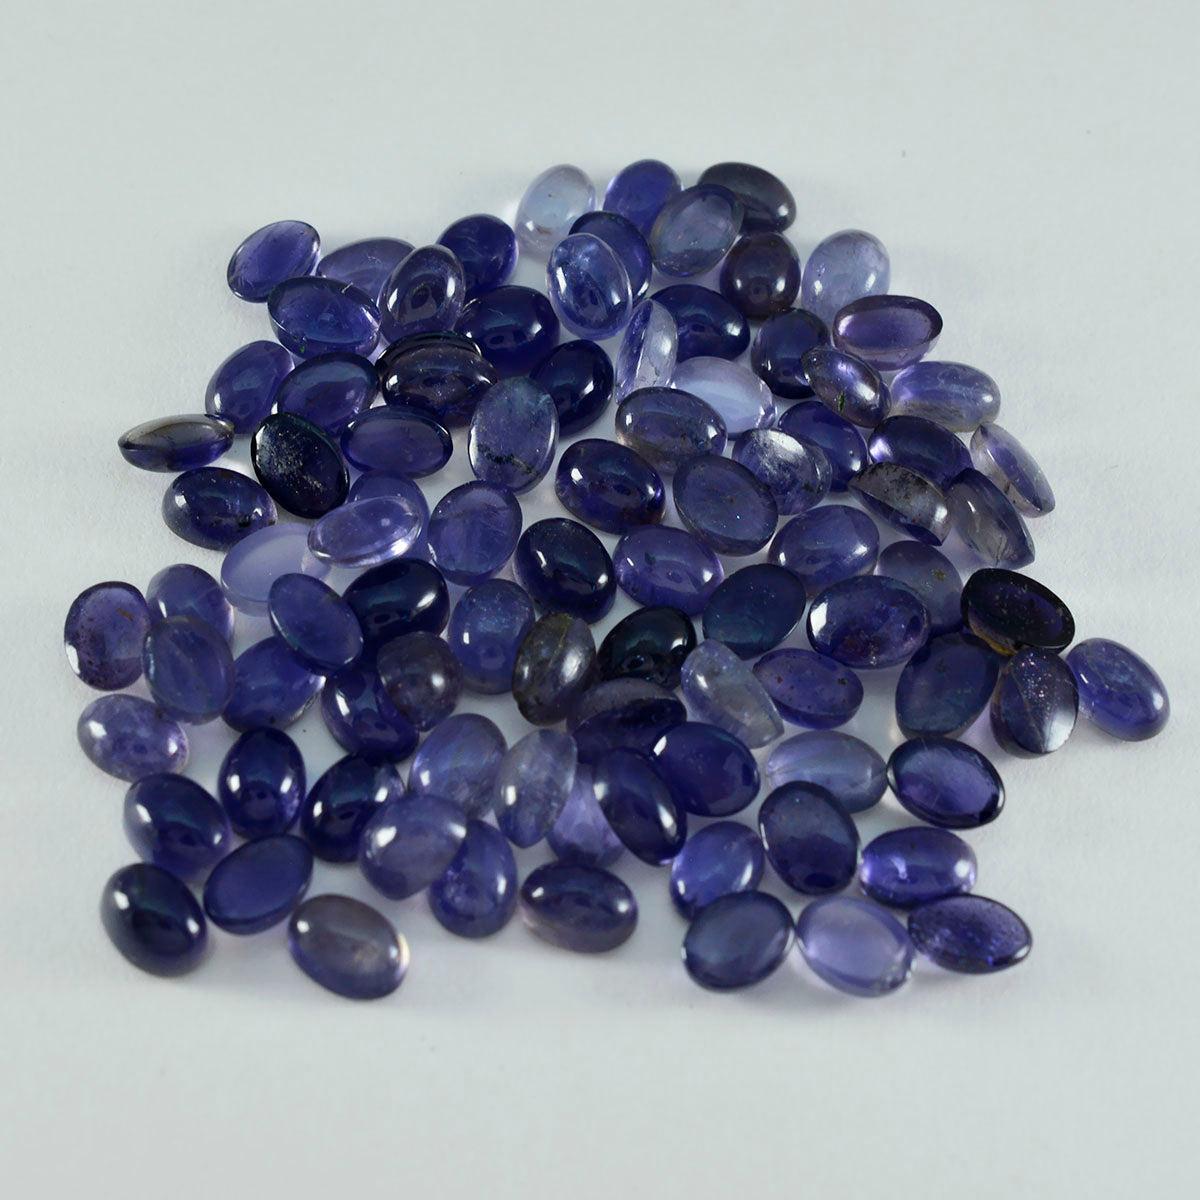 Riyogems 1PC Blue Iolite Cabochon 3x5 mm Oval Shape handsome Quality Loose Gemstone